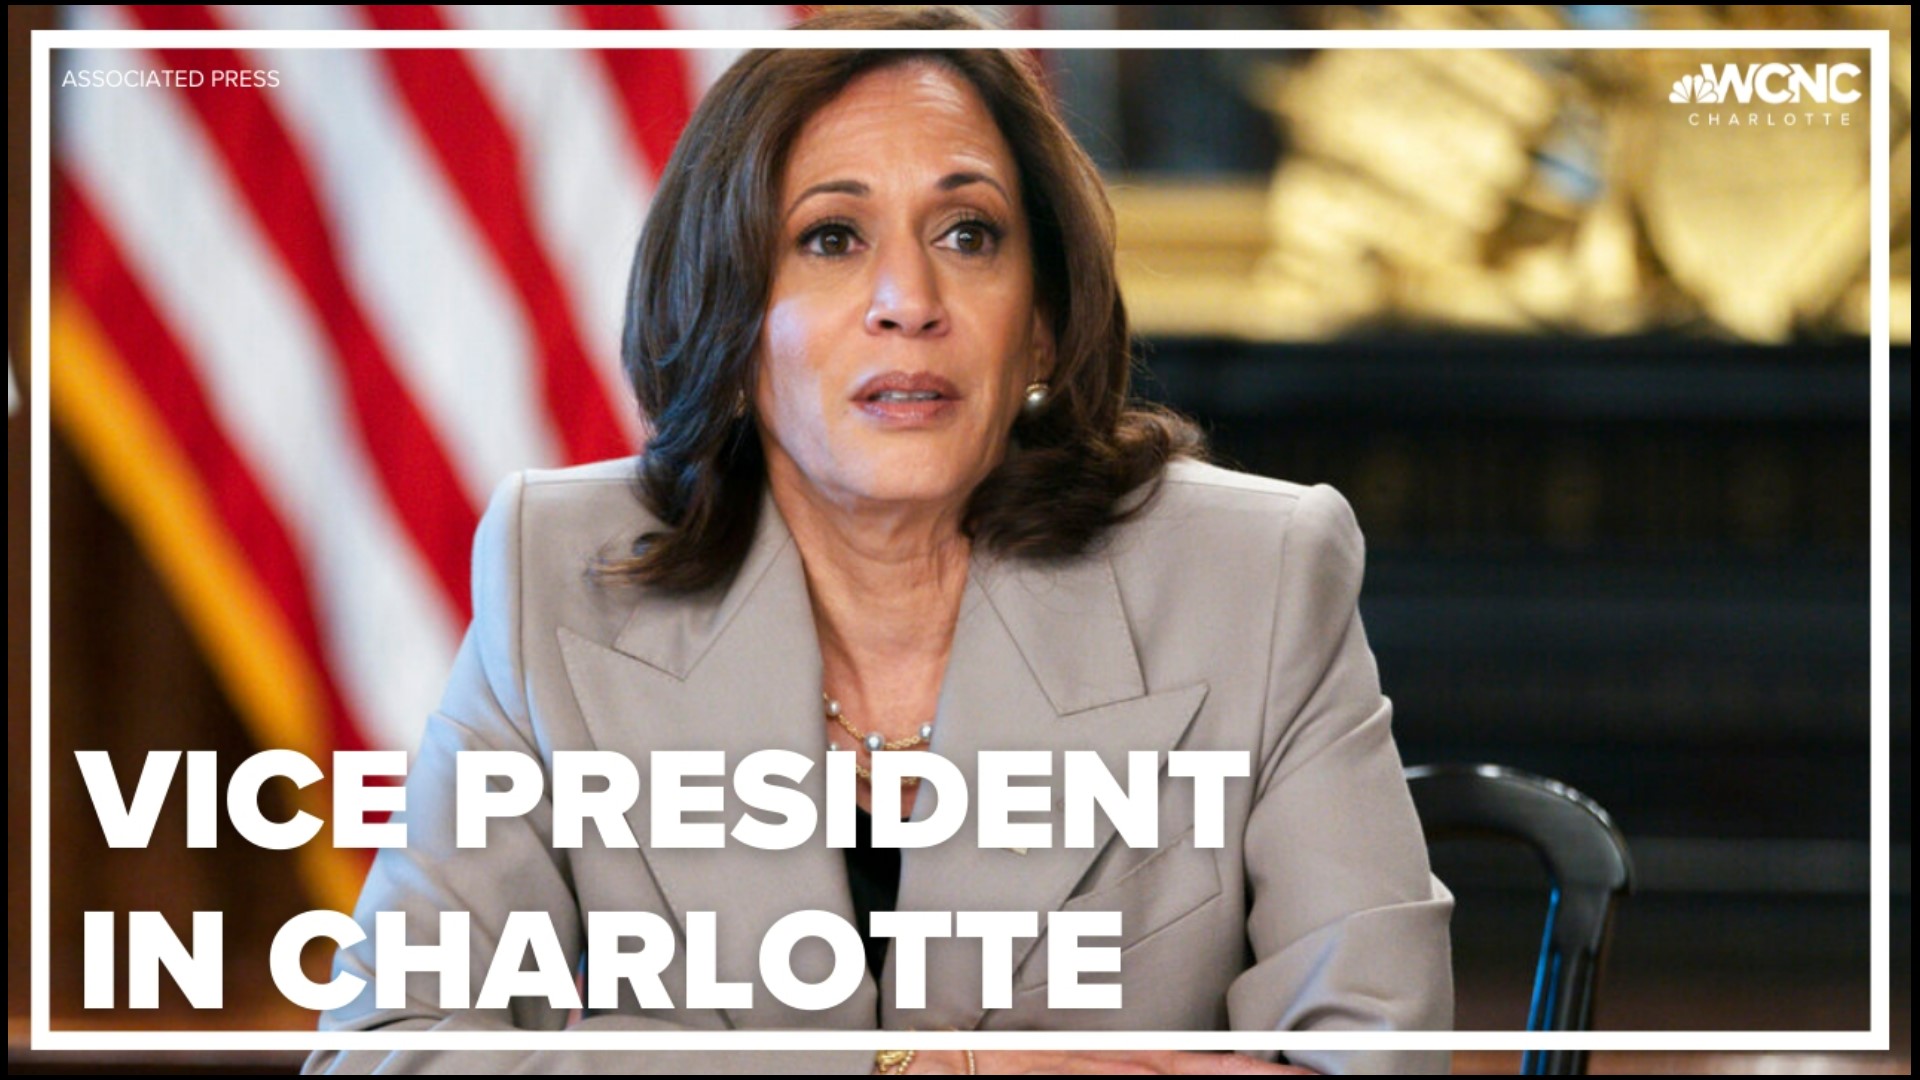 Vice President Kamala Harris visited Charlotte to talk about broadband internet access.